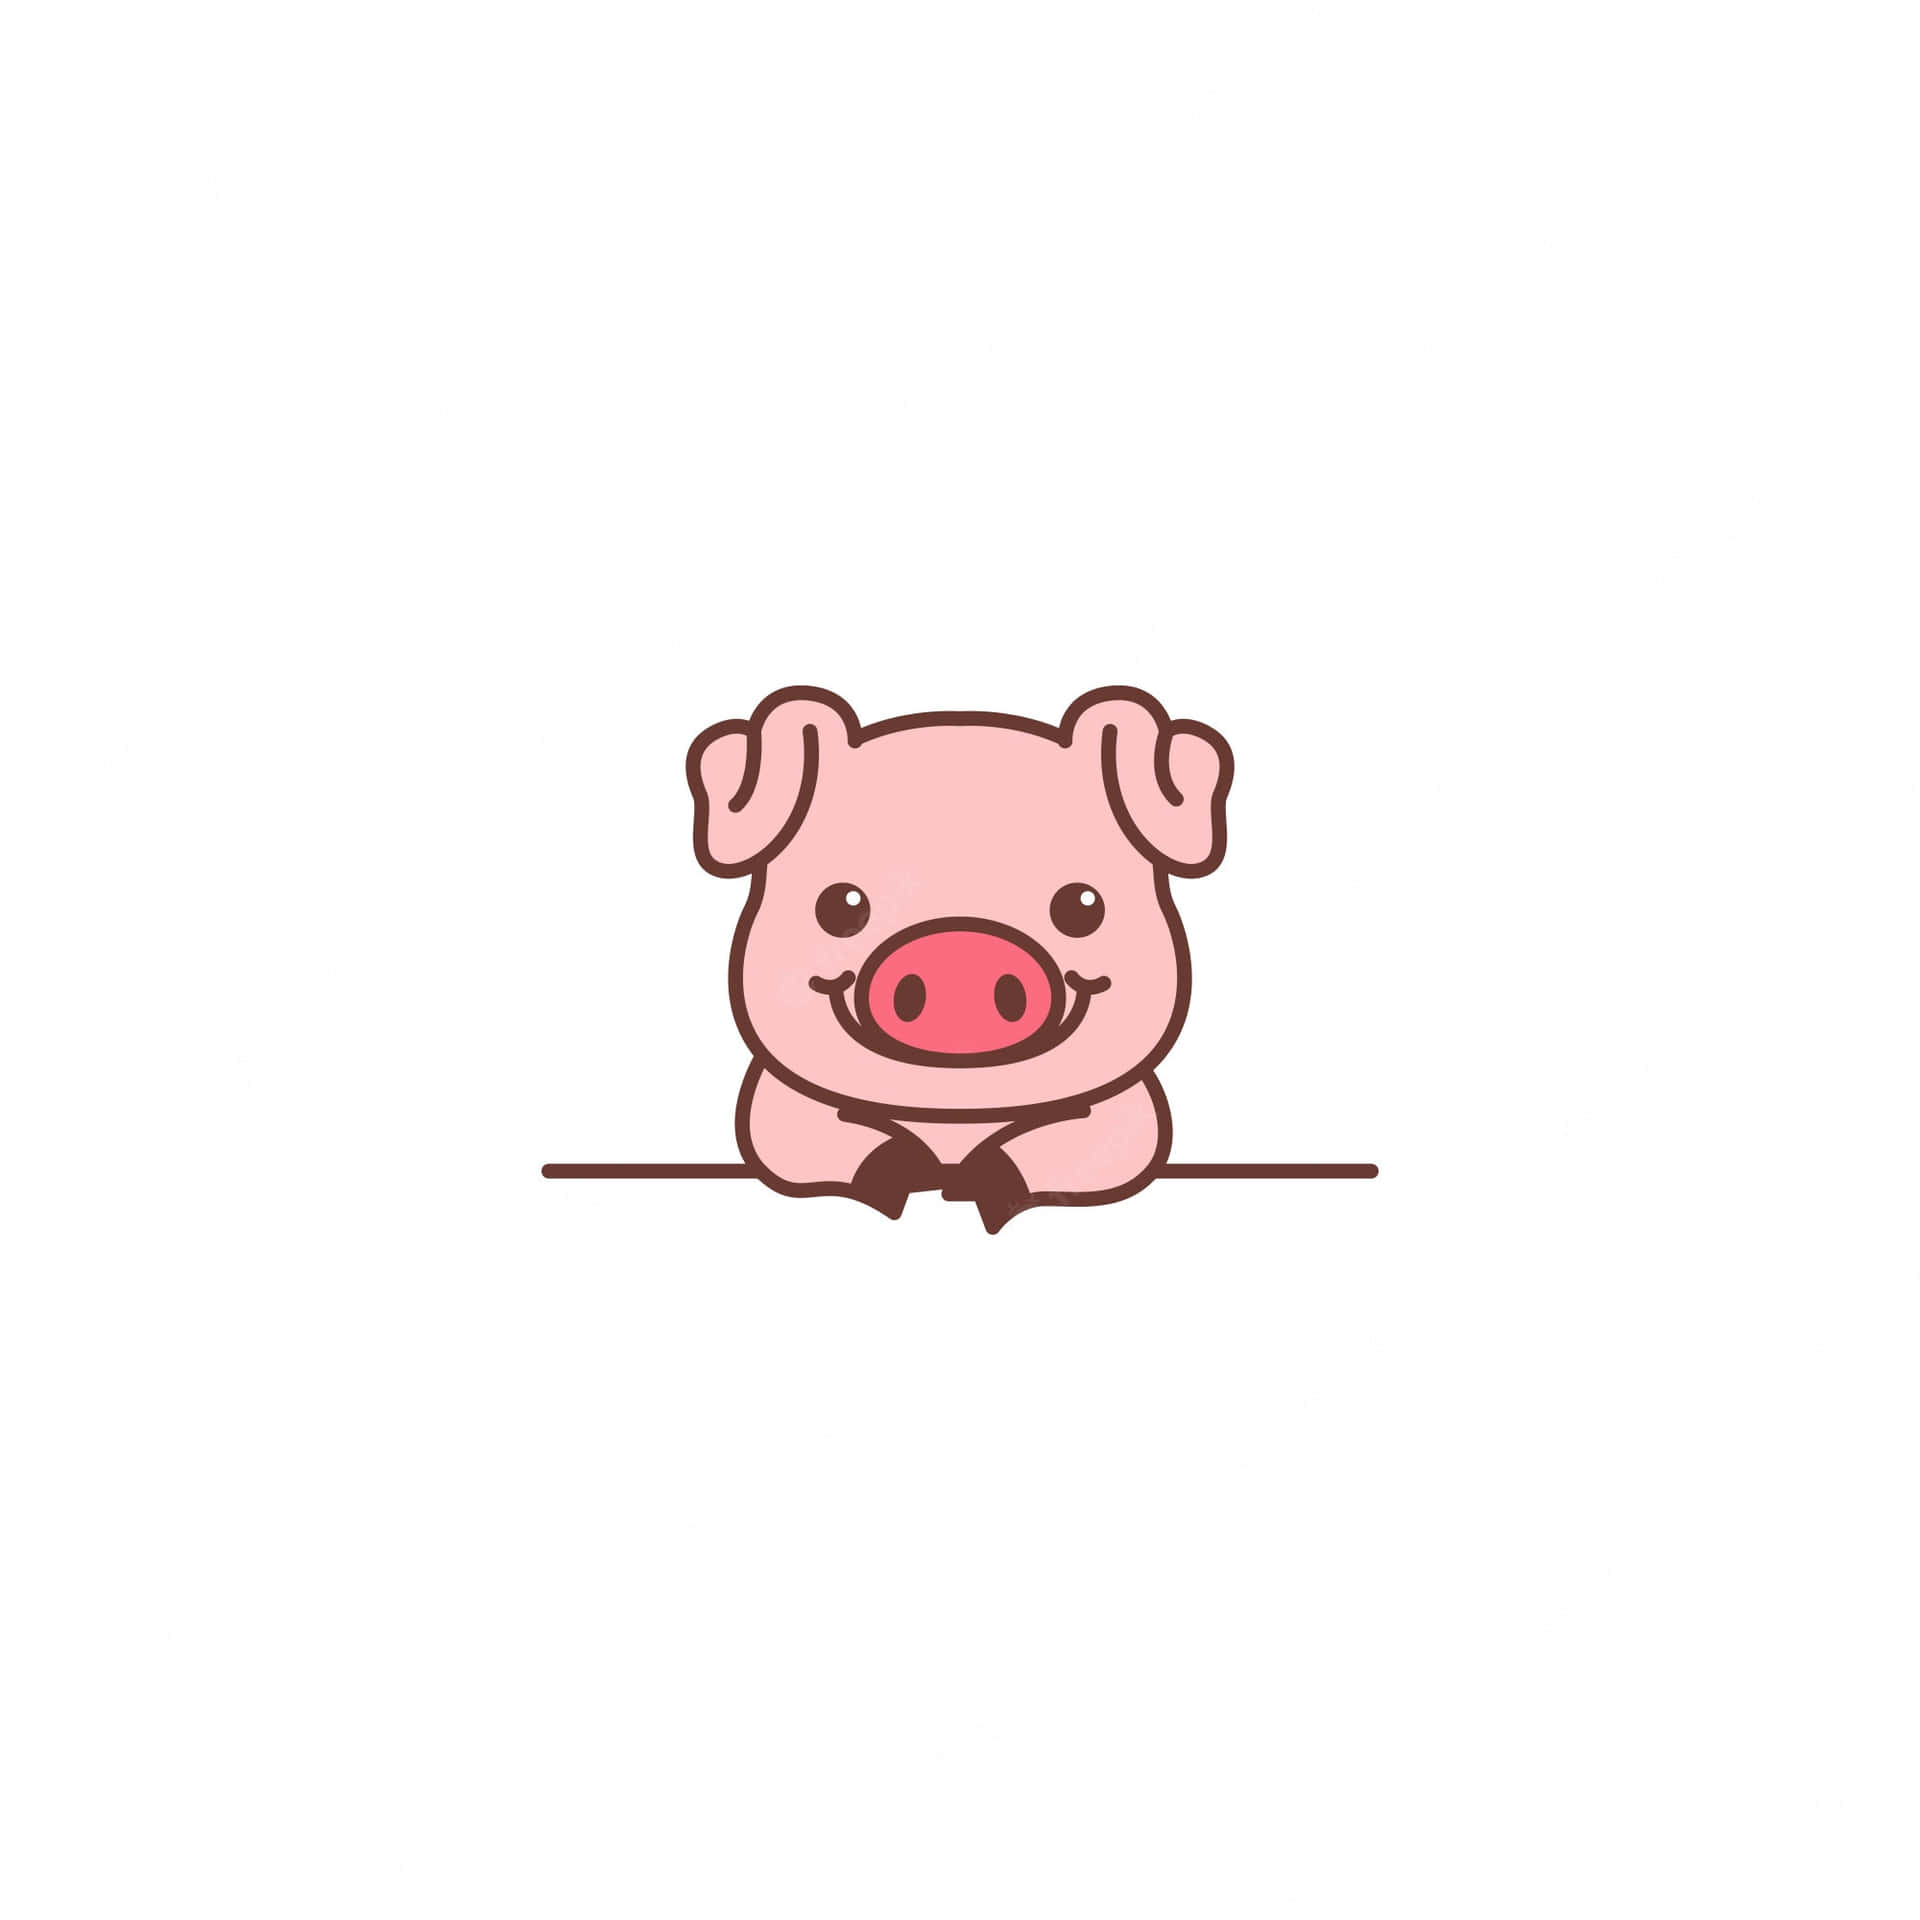 cute pig cartoon images